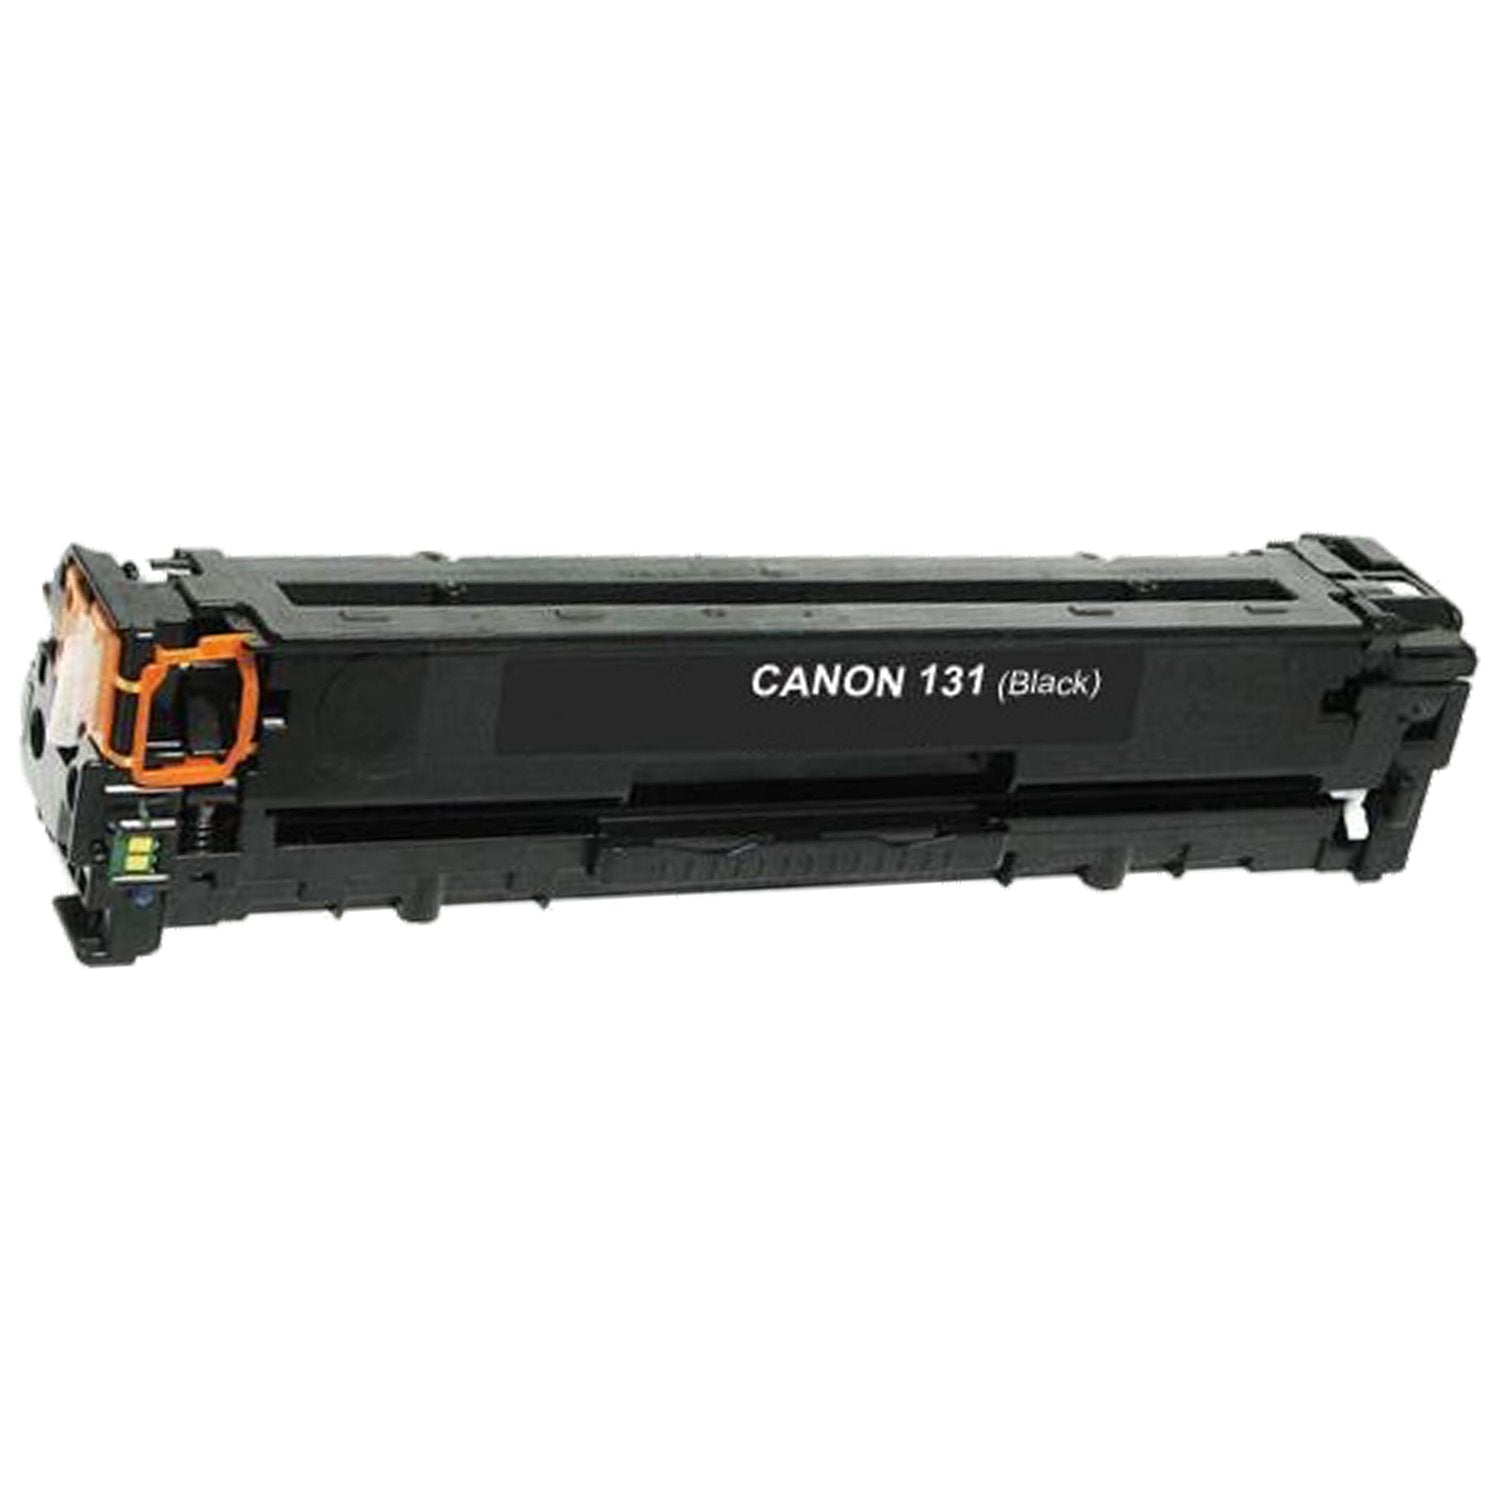 Absolute Toner Compatible Canon 131 Black Toner Cartridge | Absolute Toner Canon Toner Cartridges